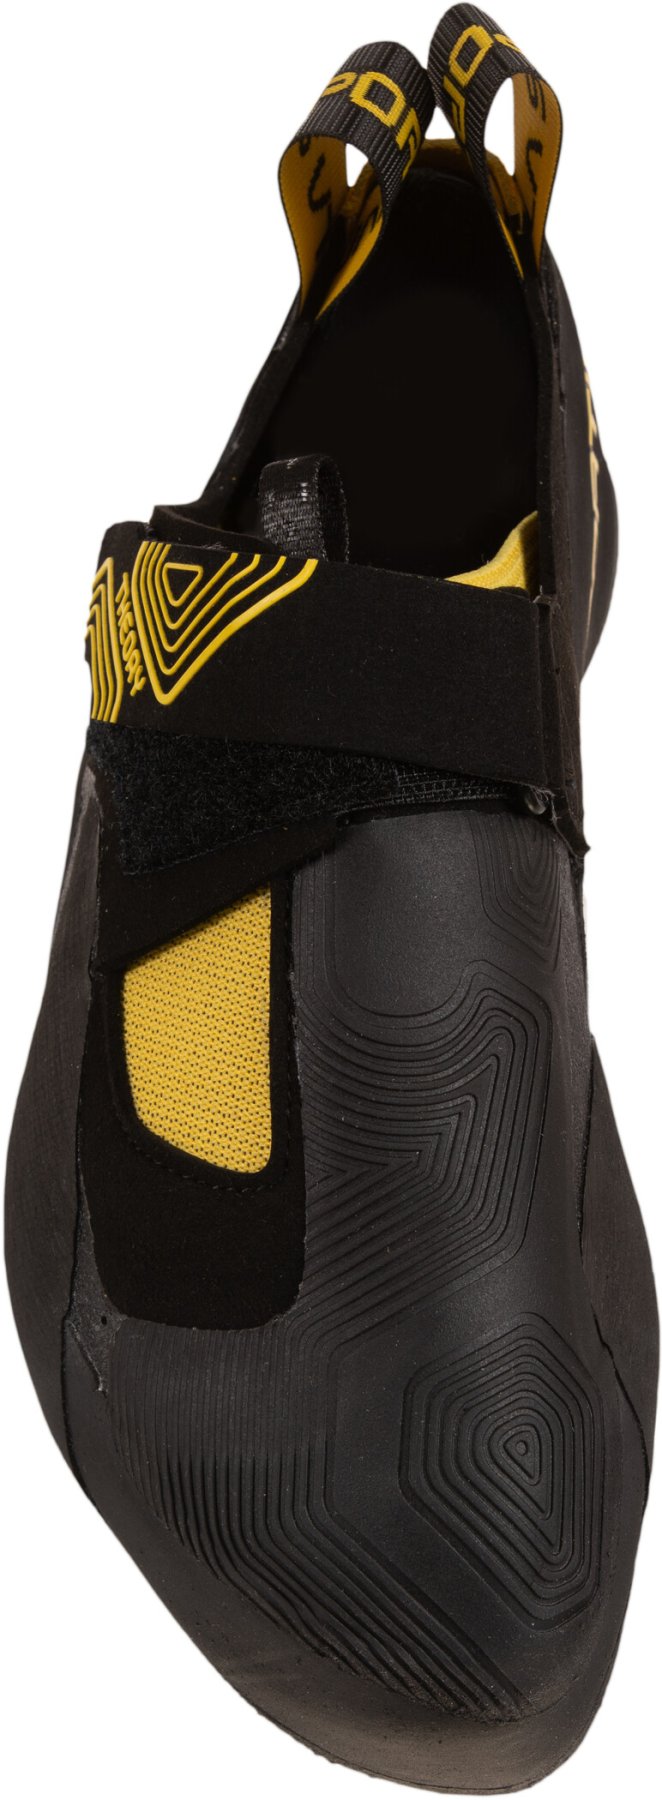 Theory - black/yellow, men's climbing shoes